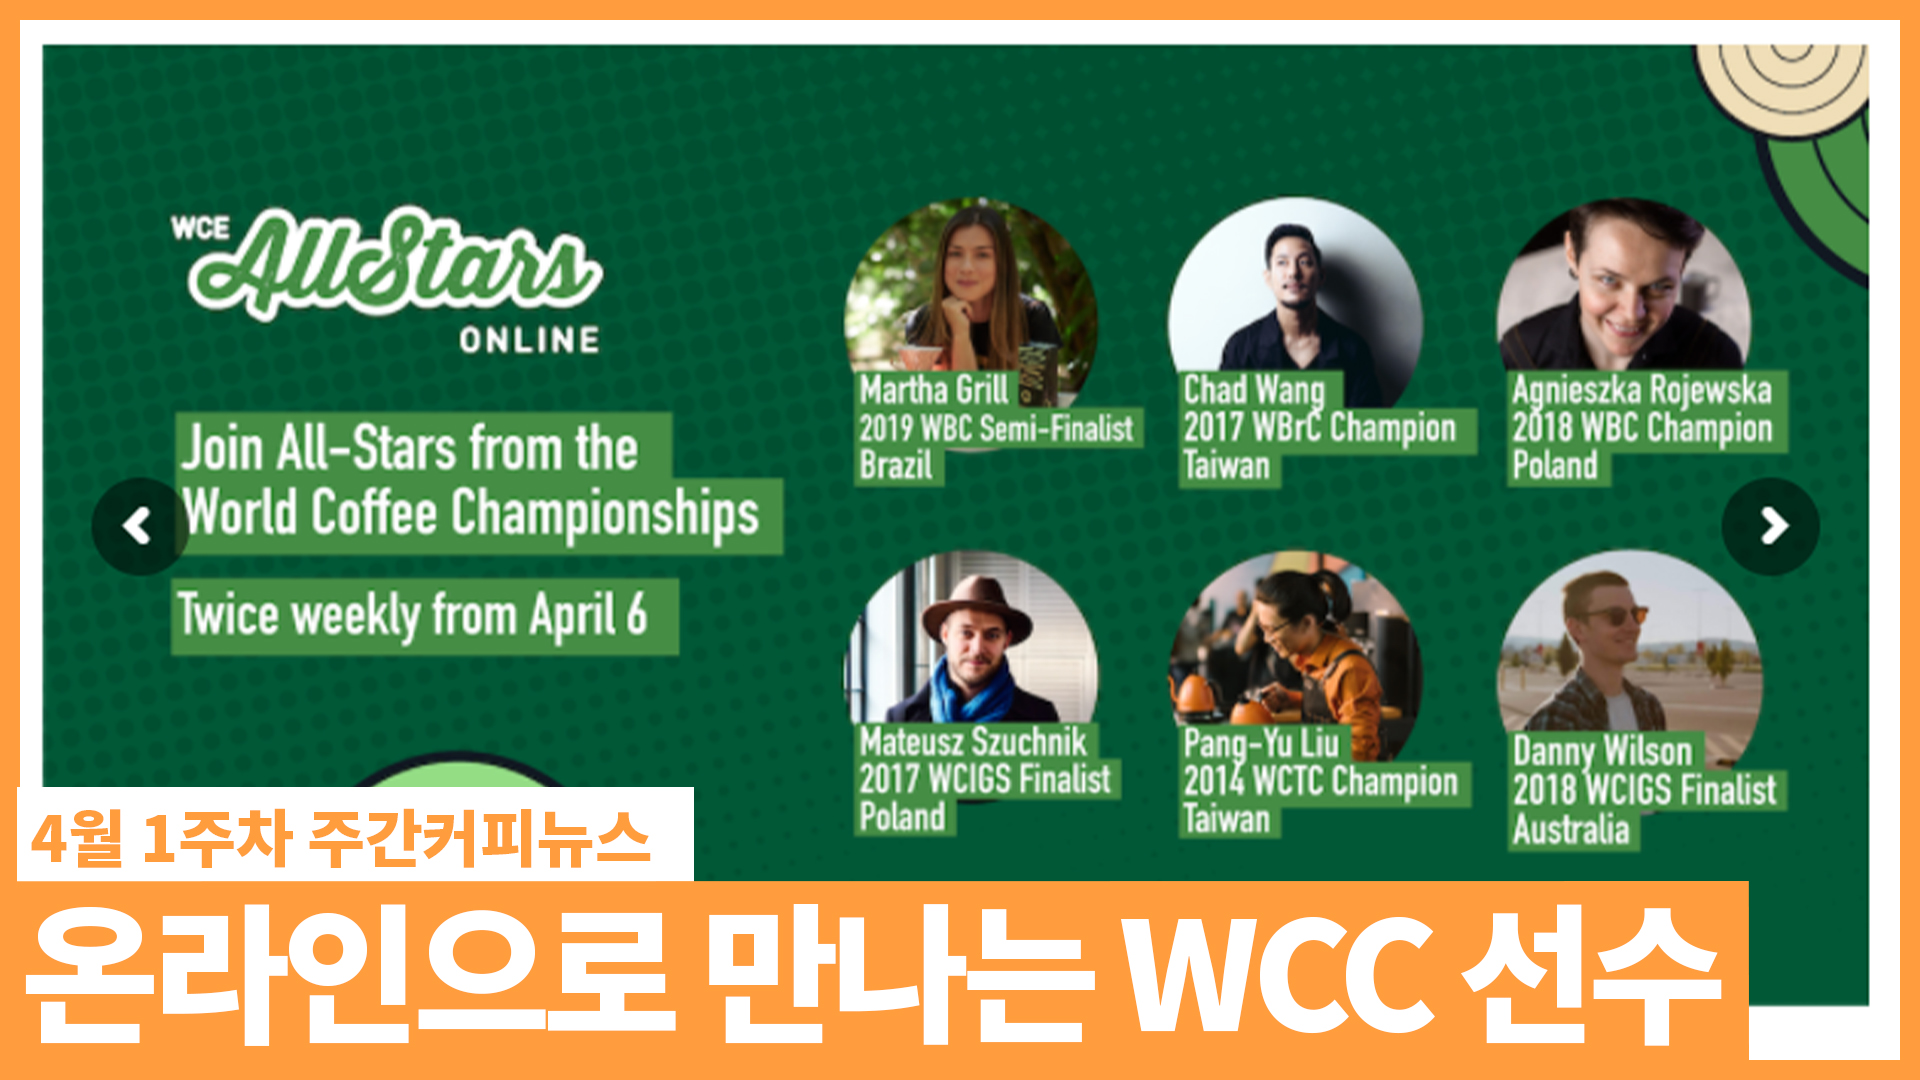 WCC의 선수들을 만날 수 있는 올스타즈 온라인 / 4월 1주 주간커피뉴스, 커피TV